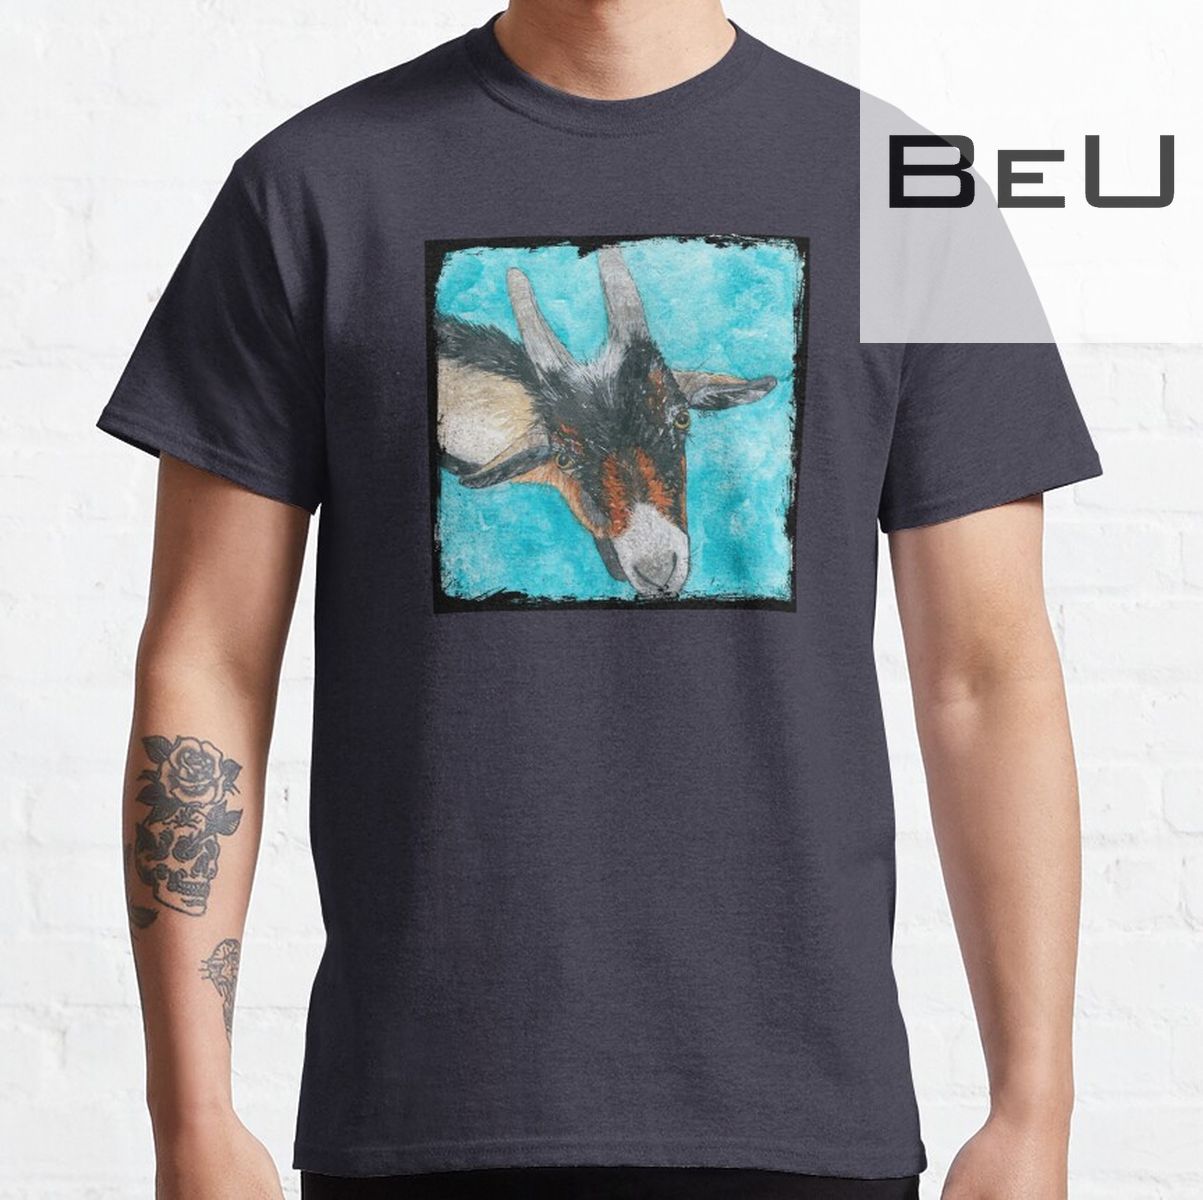 Pan Label The Goat T-shirt